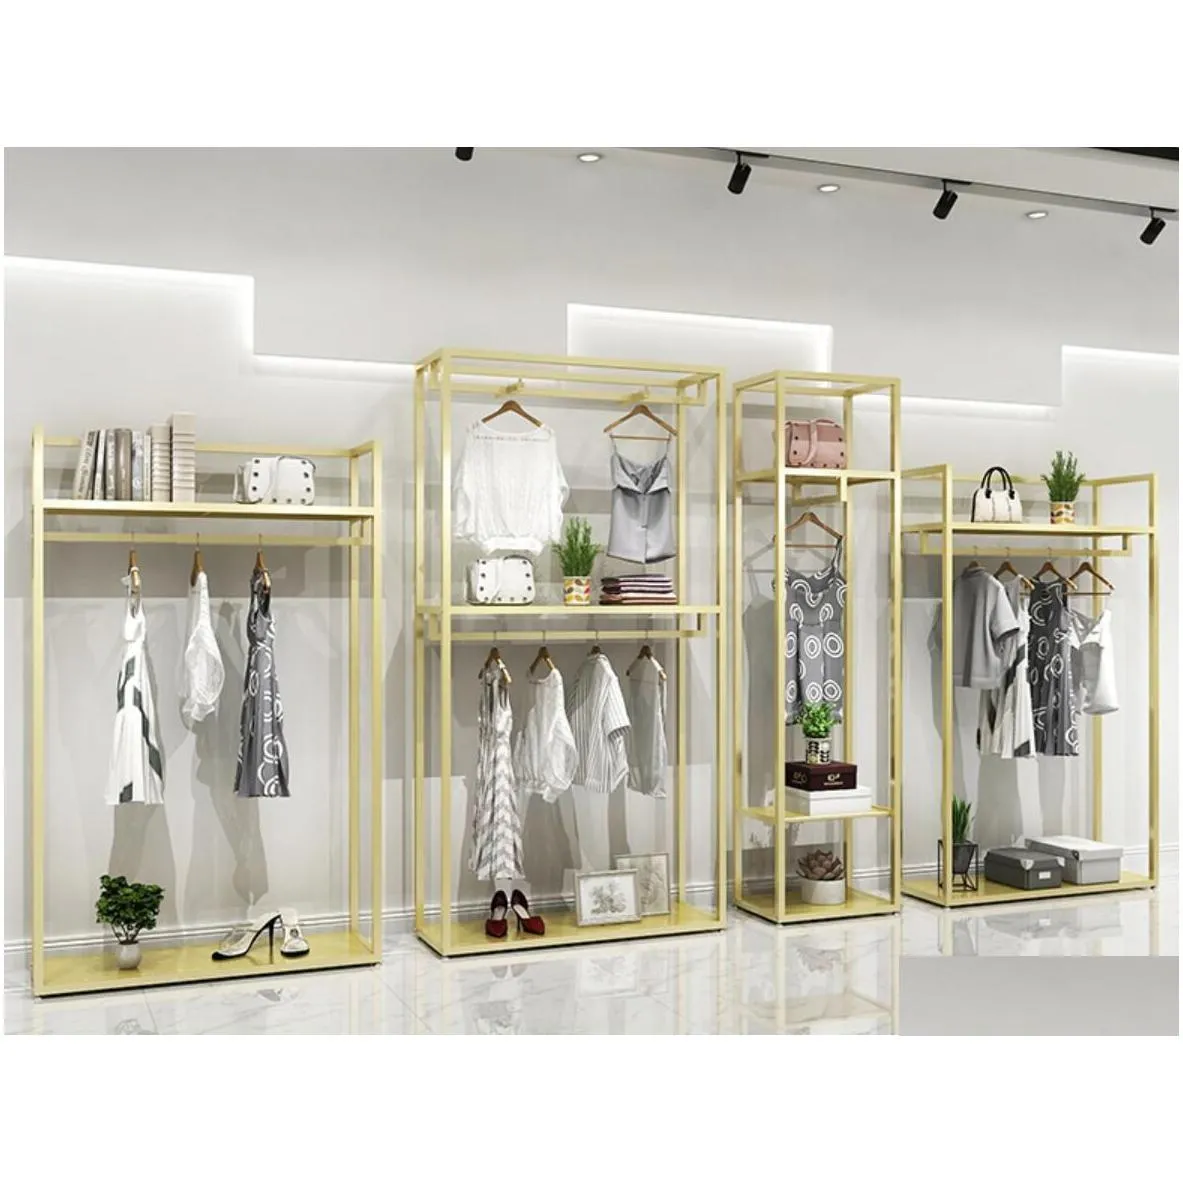 gold hanger men`s and women`s clothing store shelf commercial furniture clothes display rack floor type shelfs golden ha304g